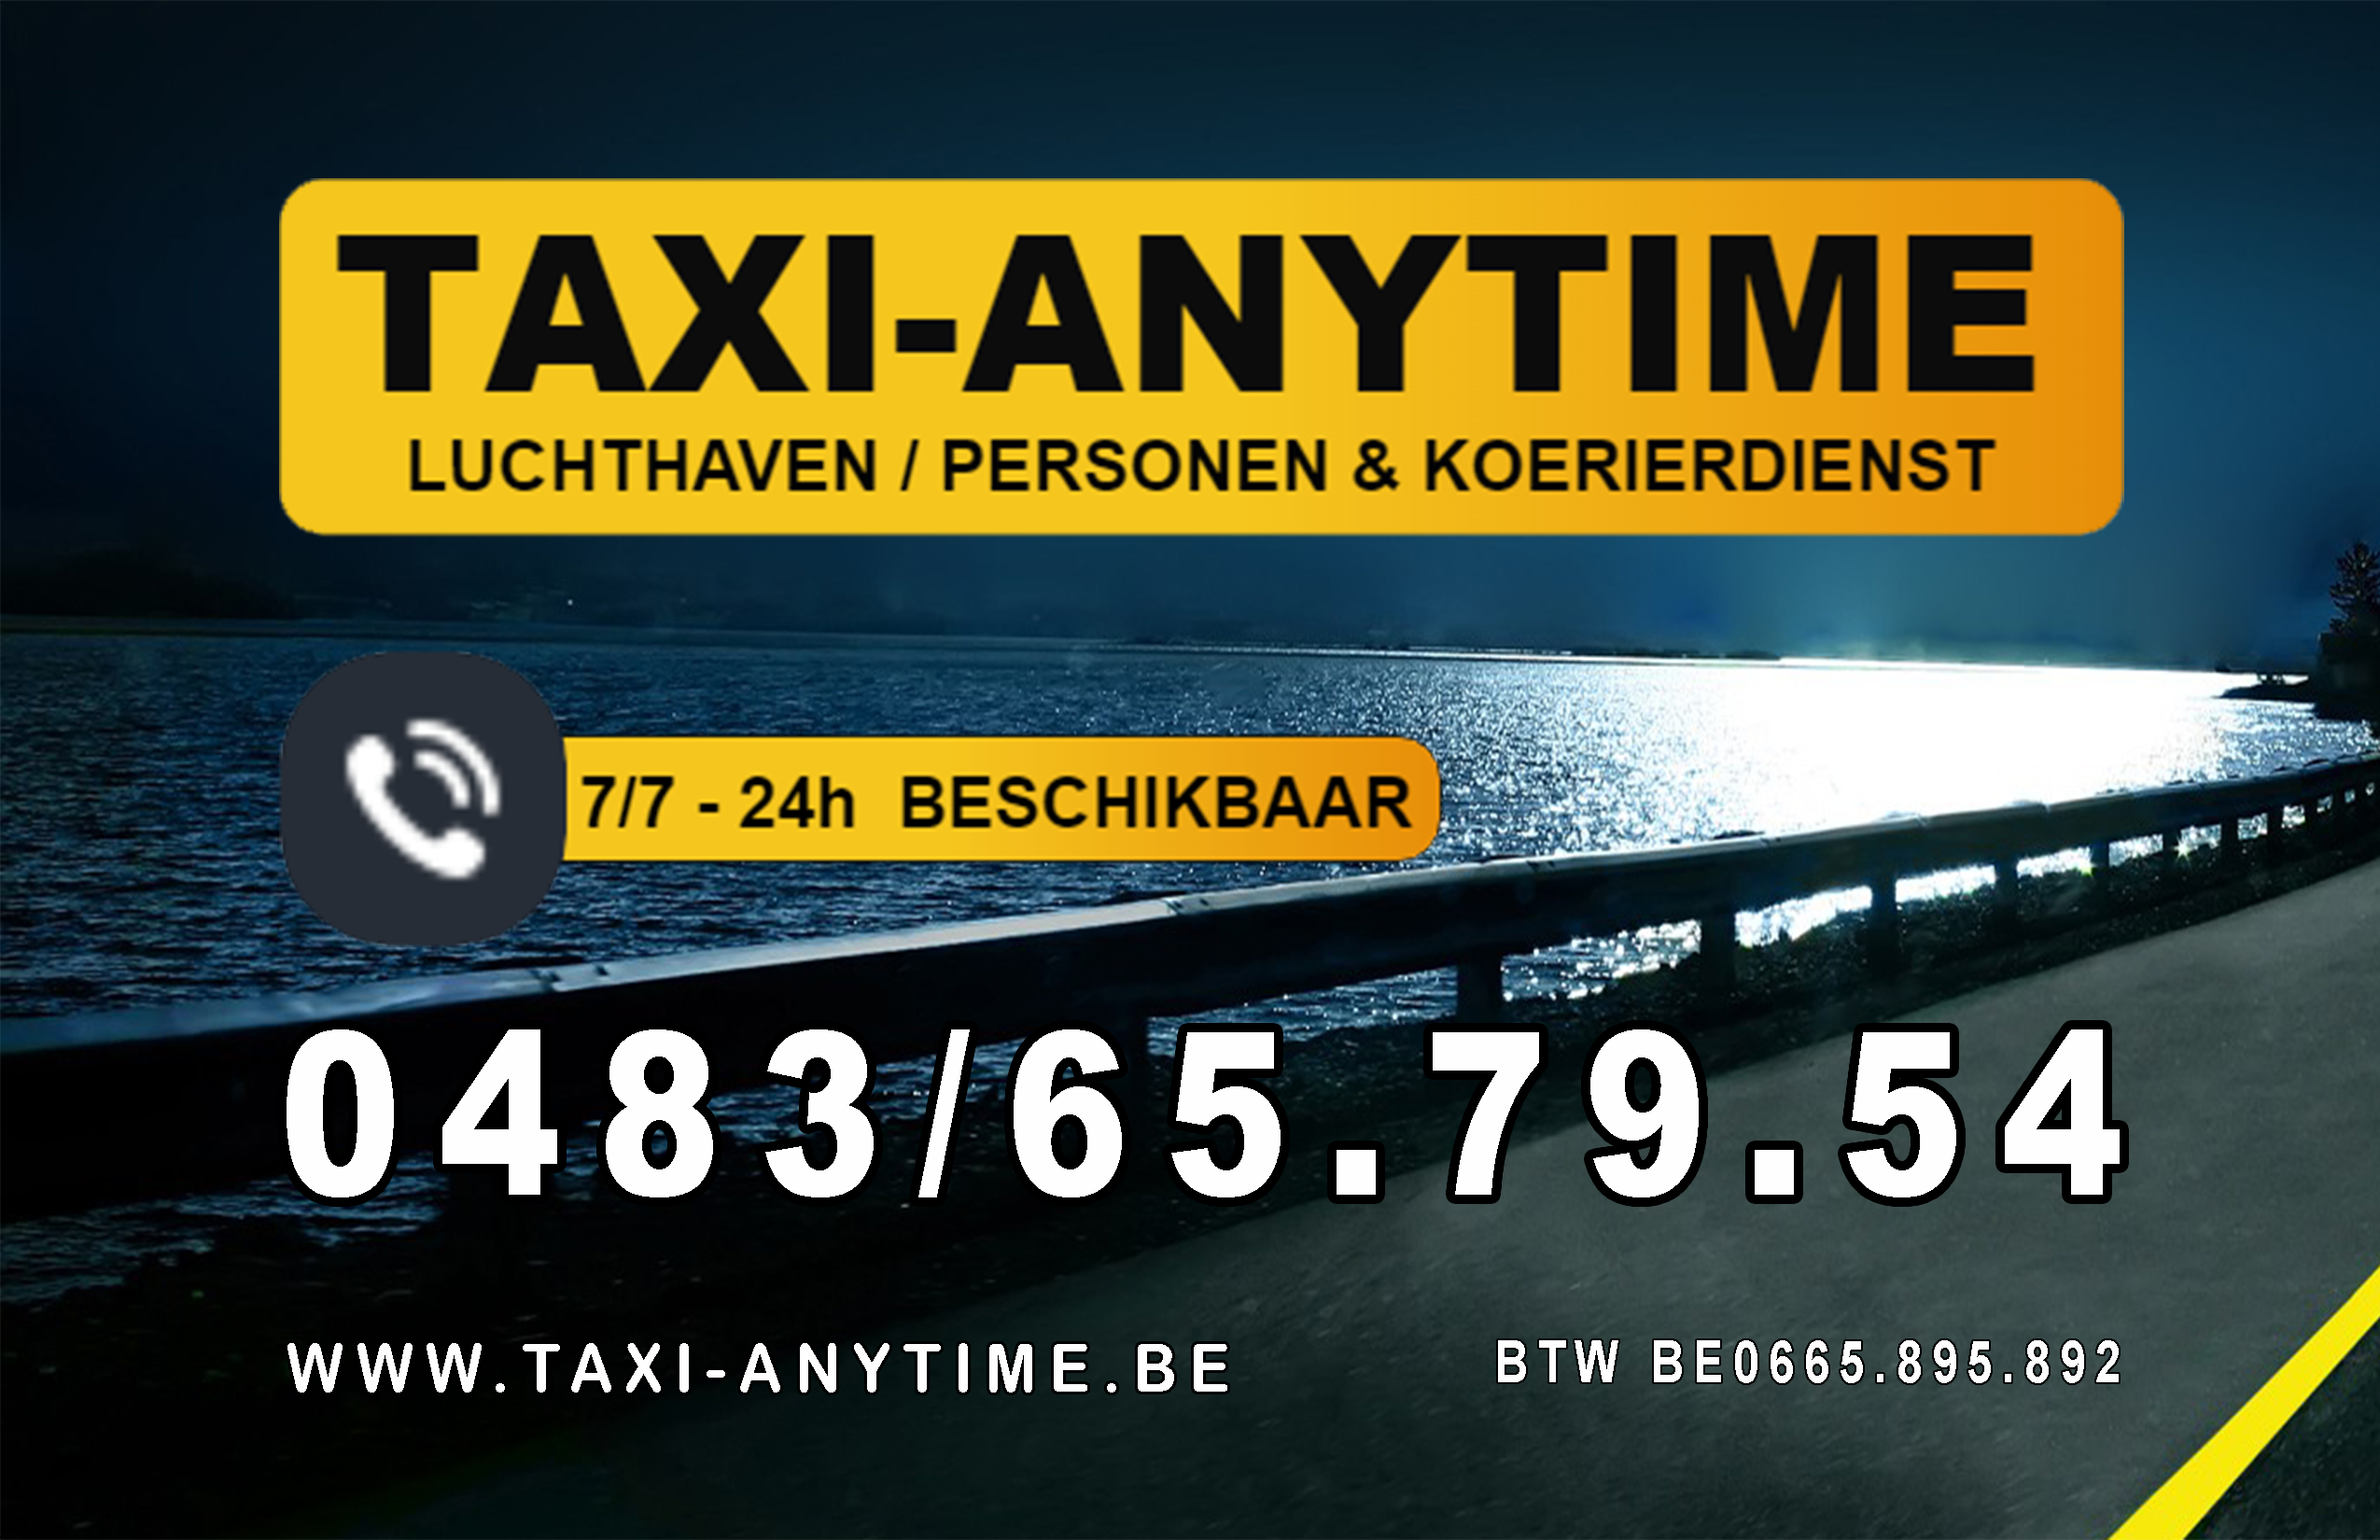 taxibedrijven met luchthavenvervoer Leuven Taxi-anytime